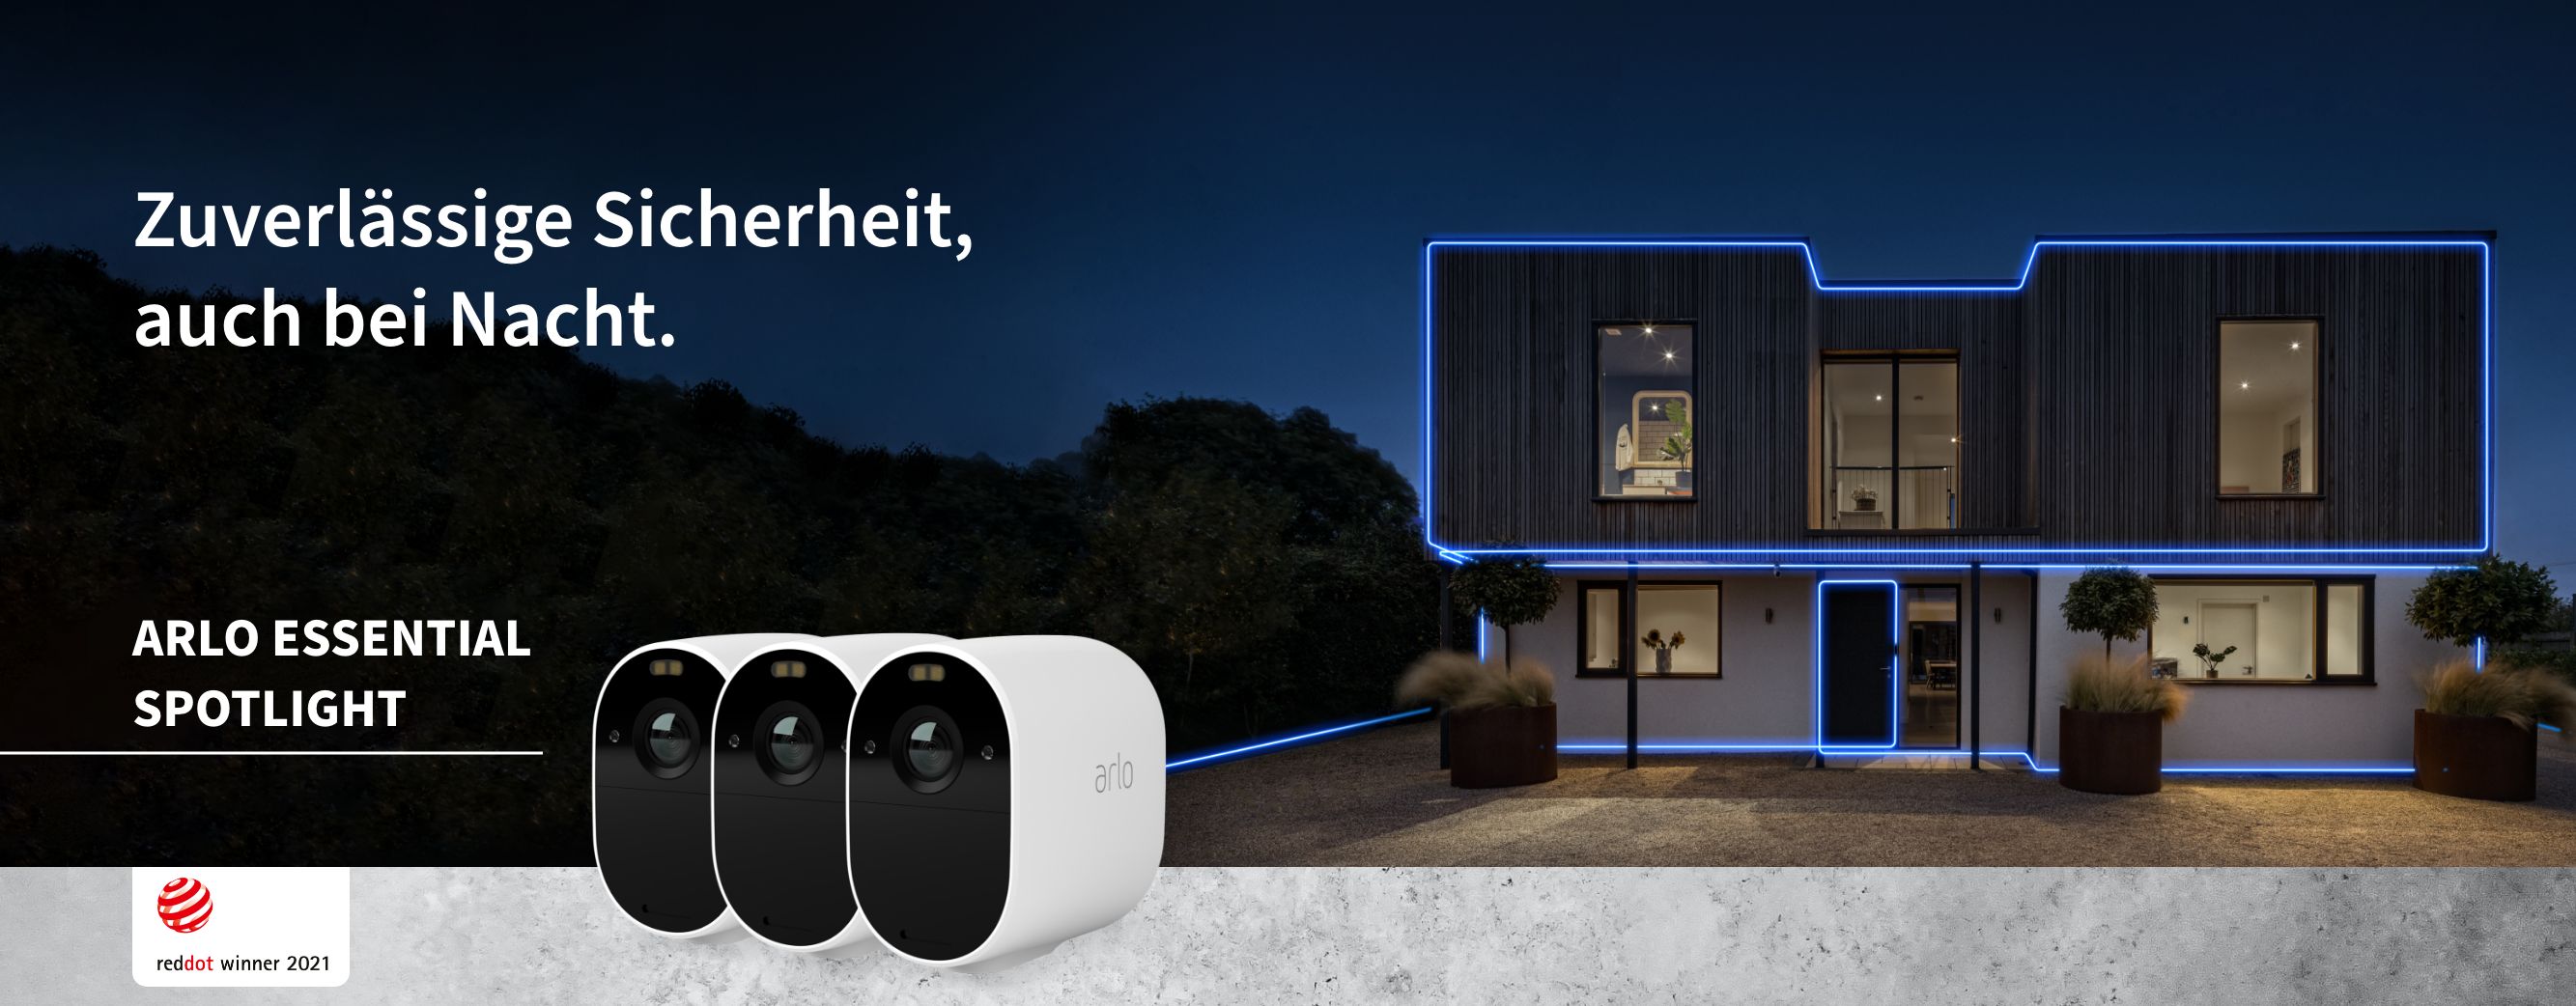 Arlo Essential Spotlight Kamera an einer Tür, Reddot -Gewinner 2021 DE